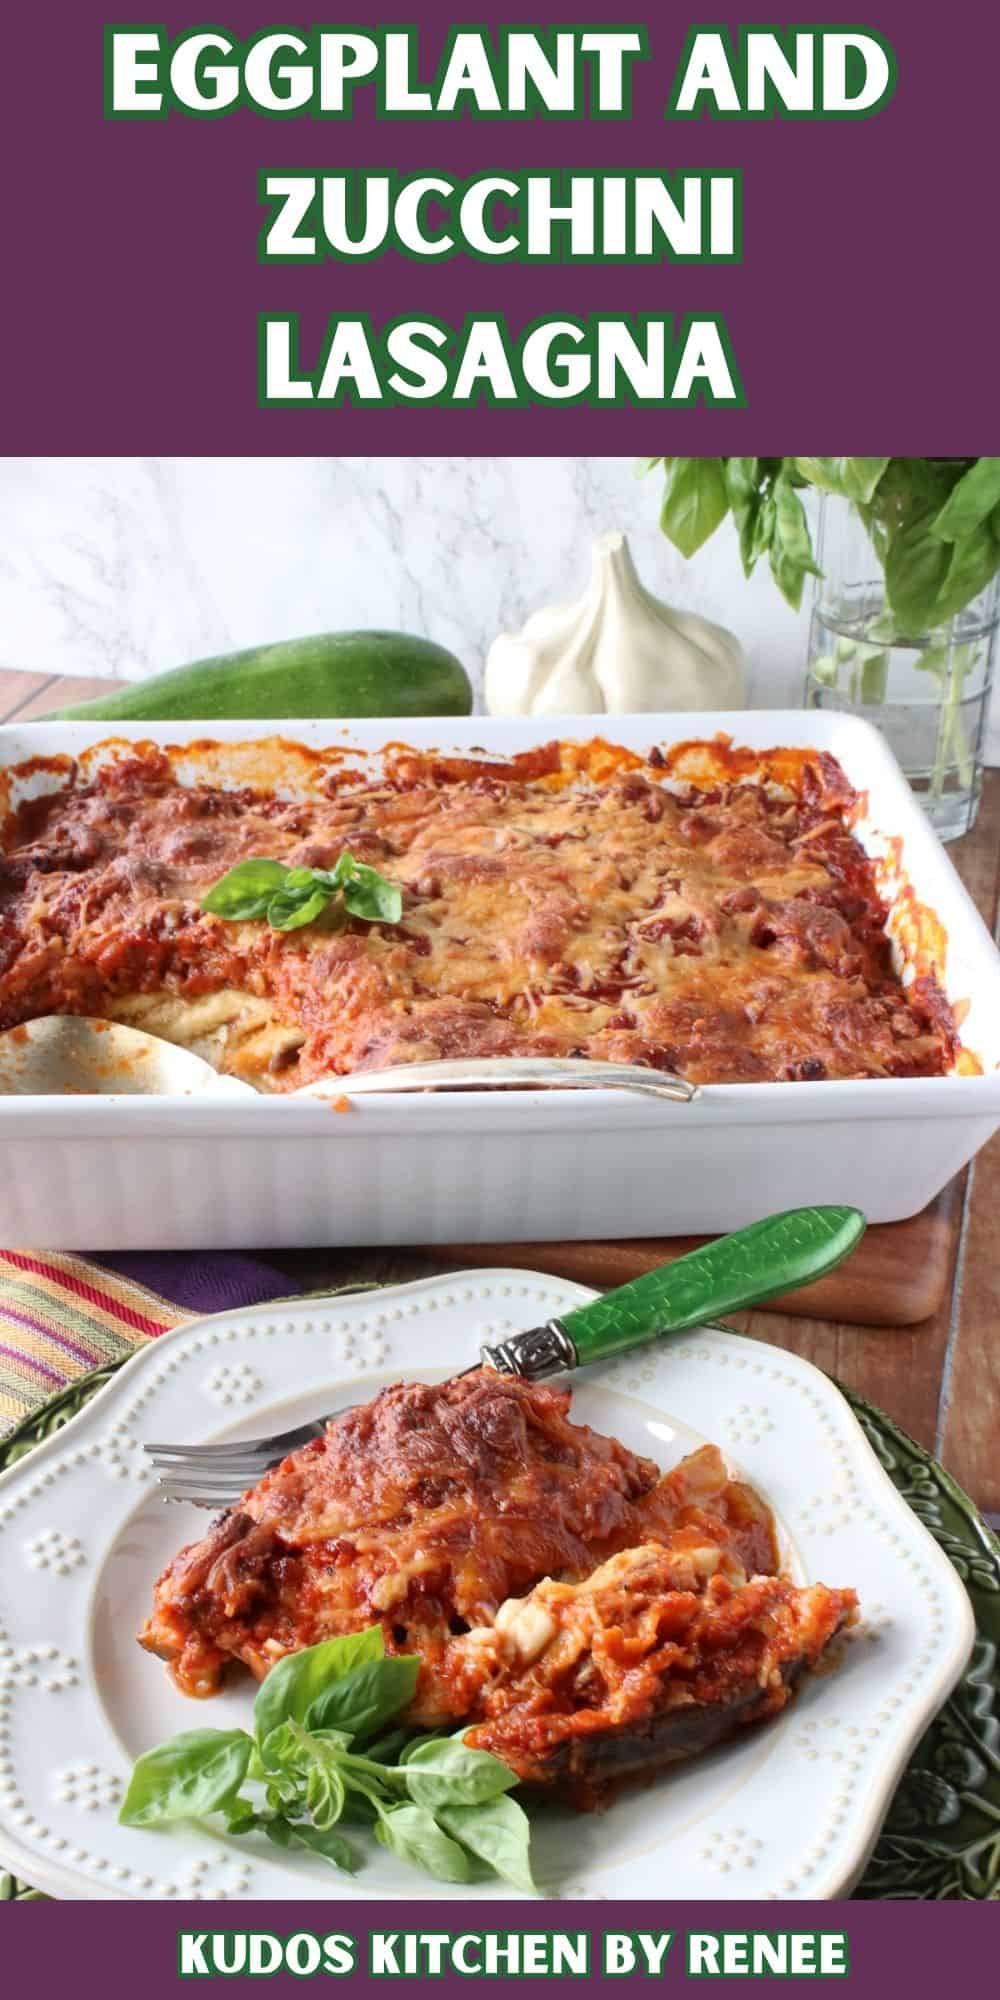 Eggplant and Zucchini Lasagna - Kudos Kitchen by Renee